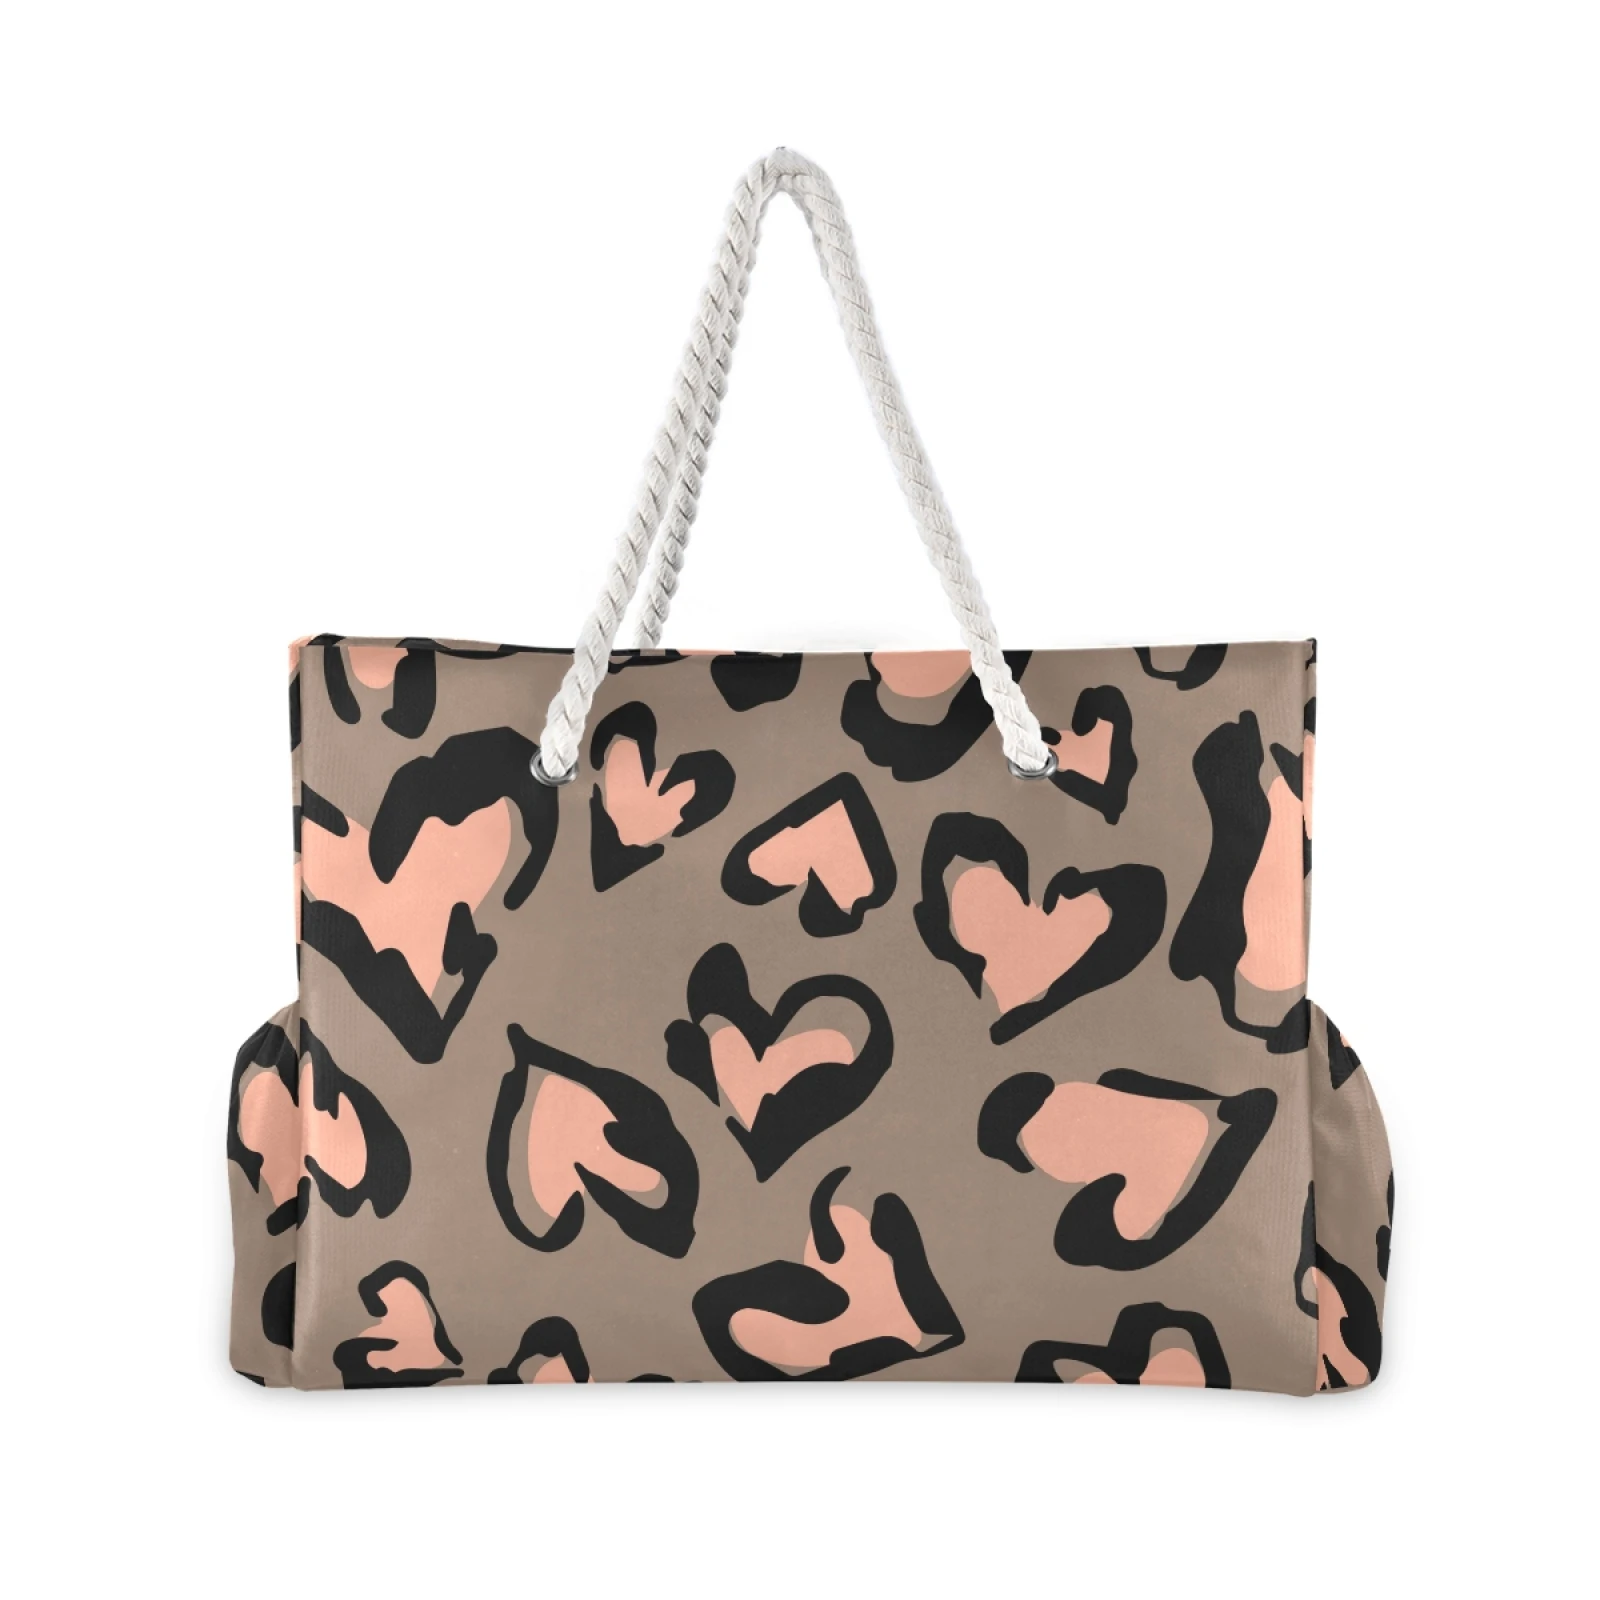 Shoulder Bag Animal Print Leopard Couple Large Handbag Tote Beach Bags for Women 